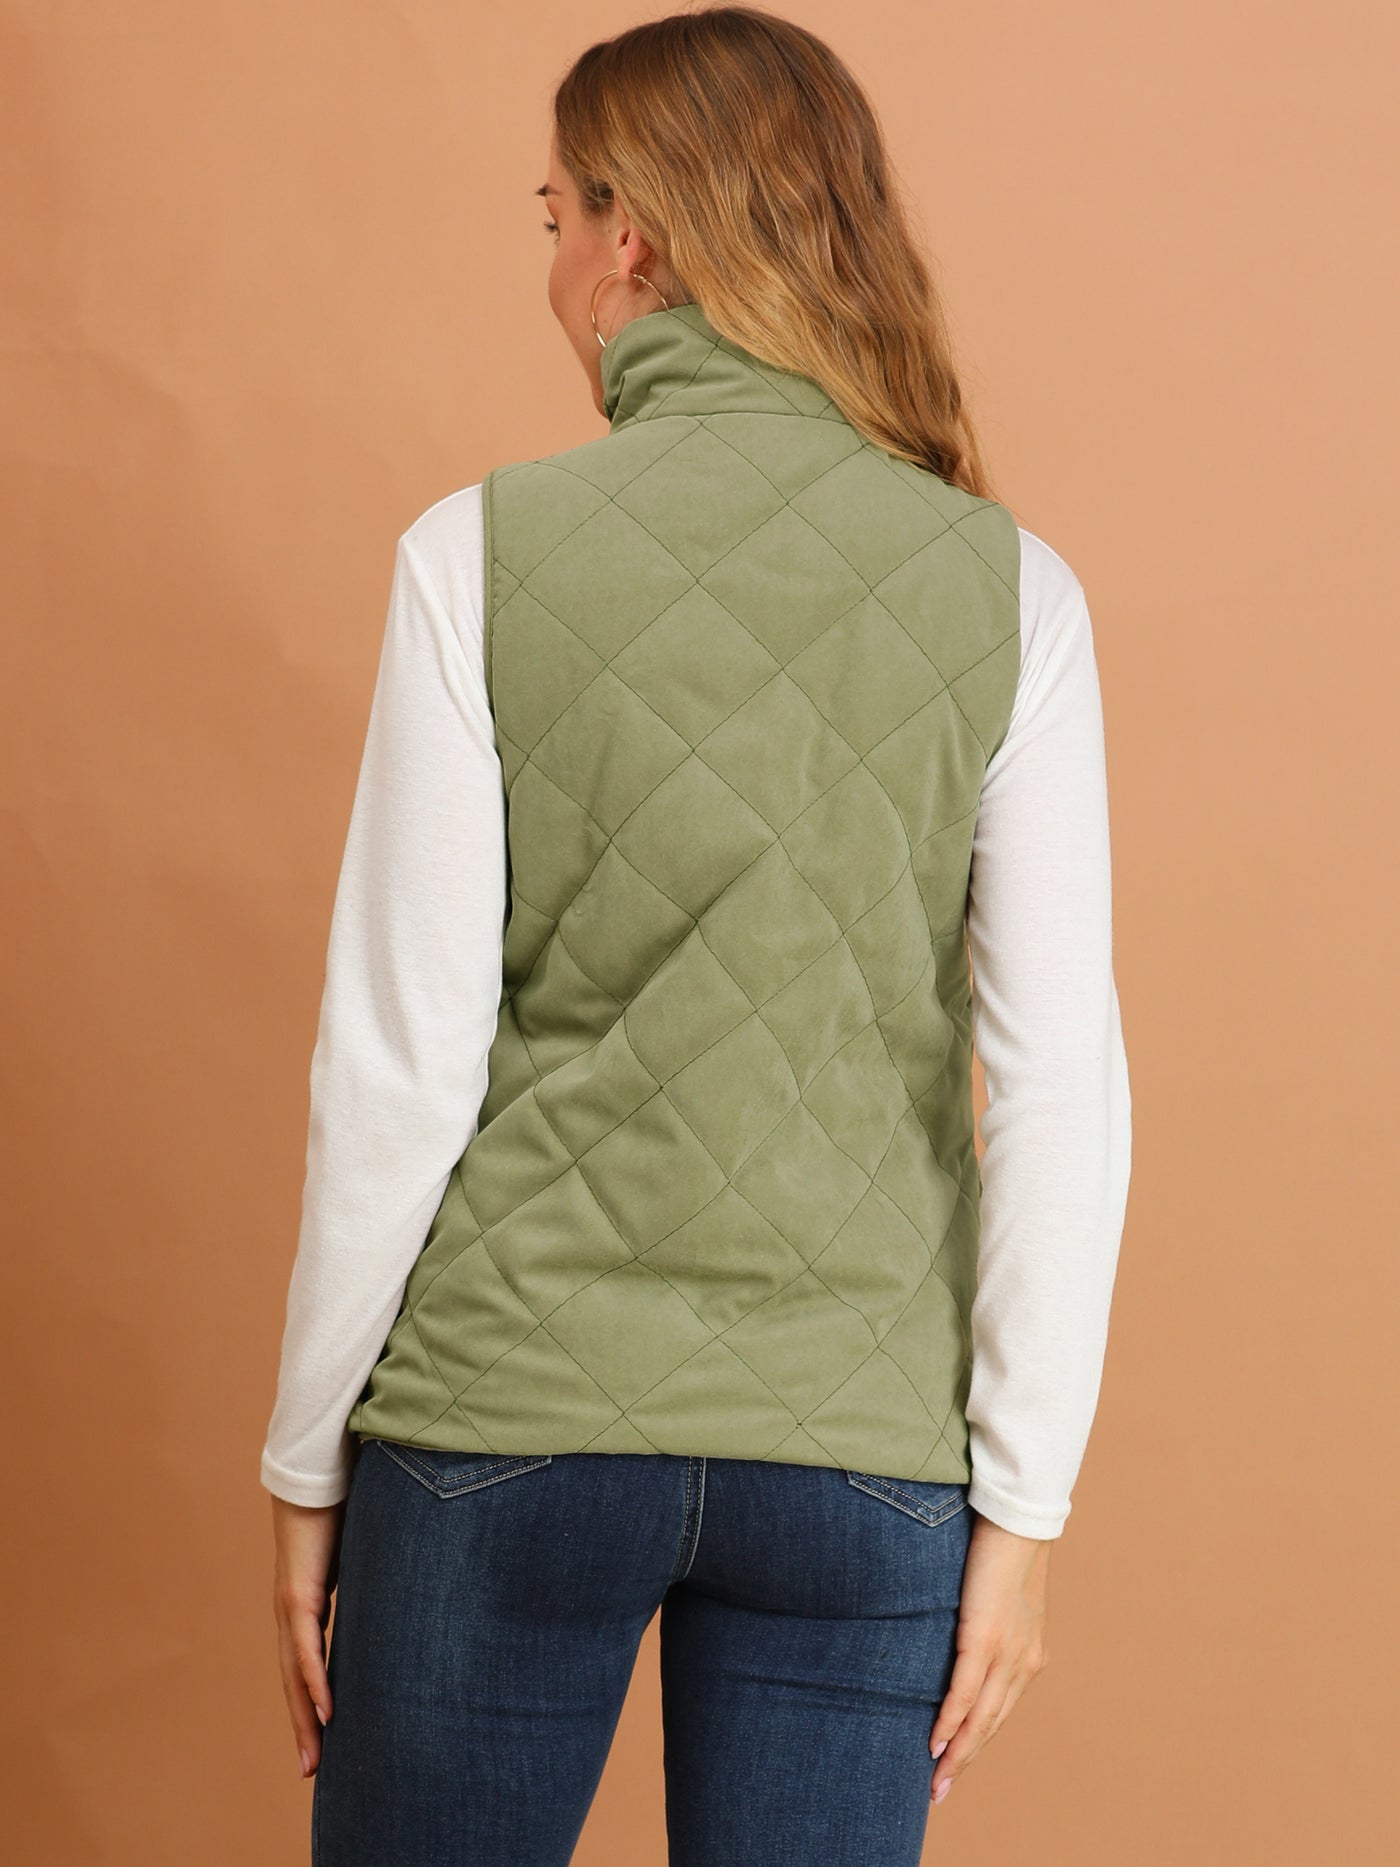 Allegra K Stand Collar Zip Up Front Quilted Fleece Vest with Pockets